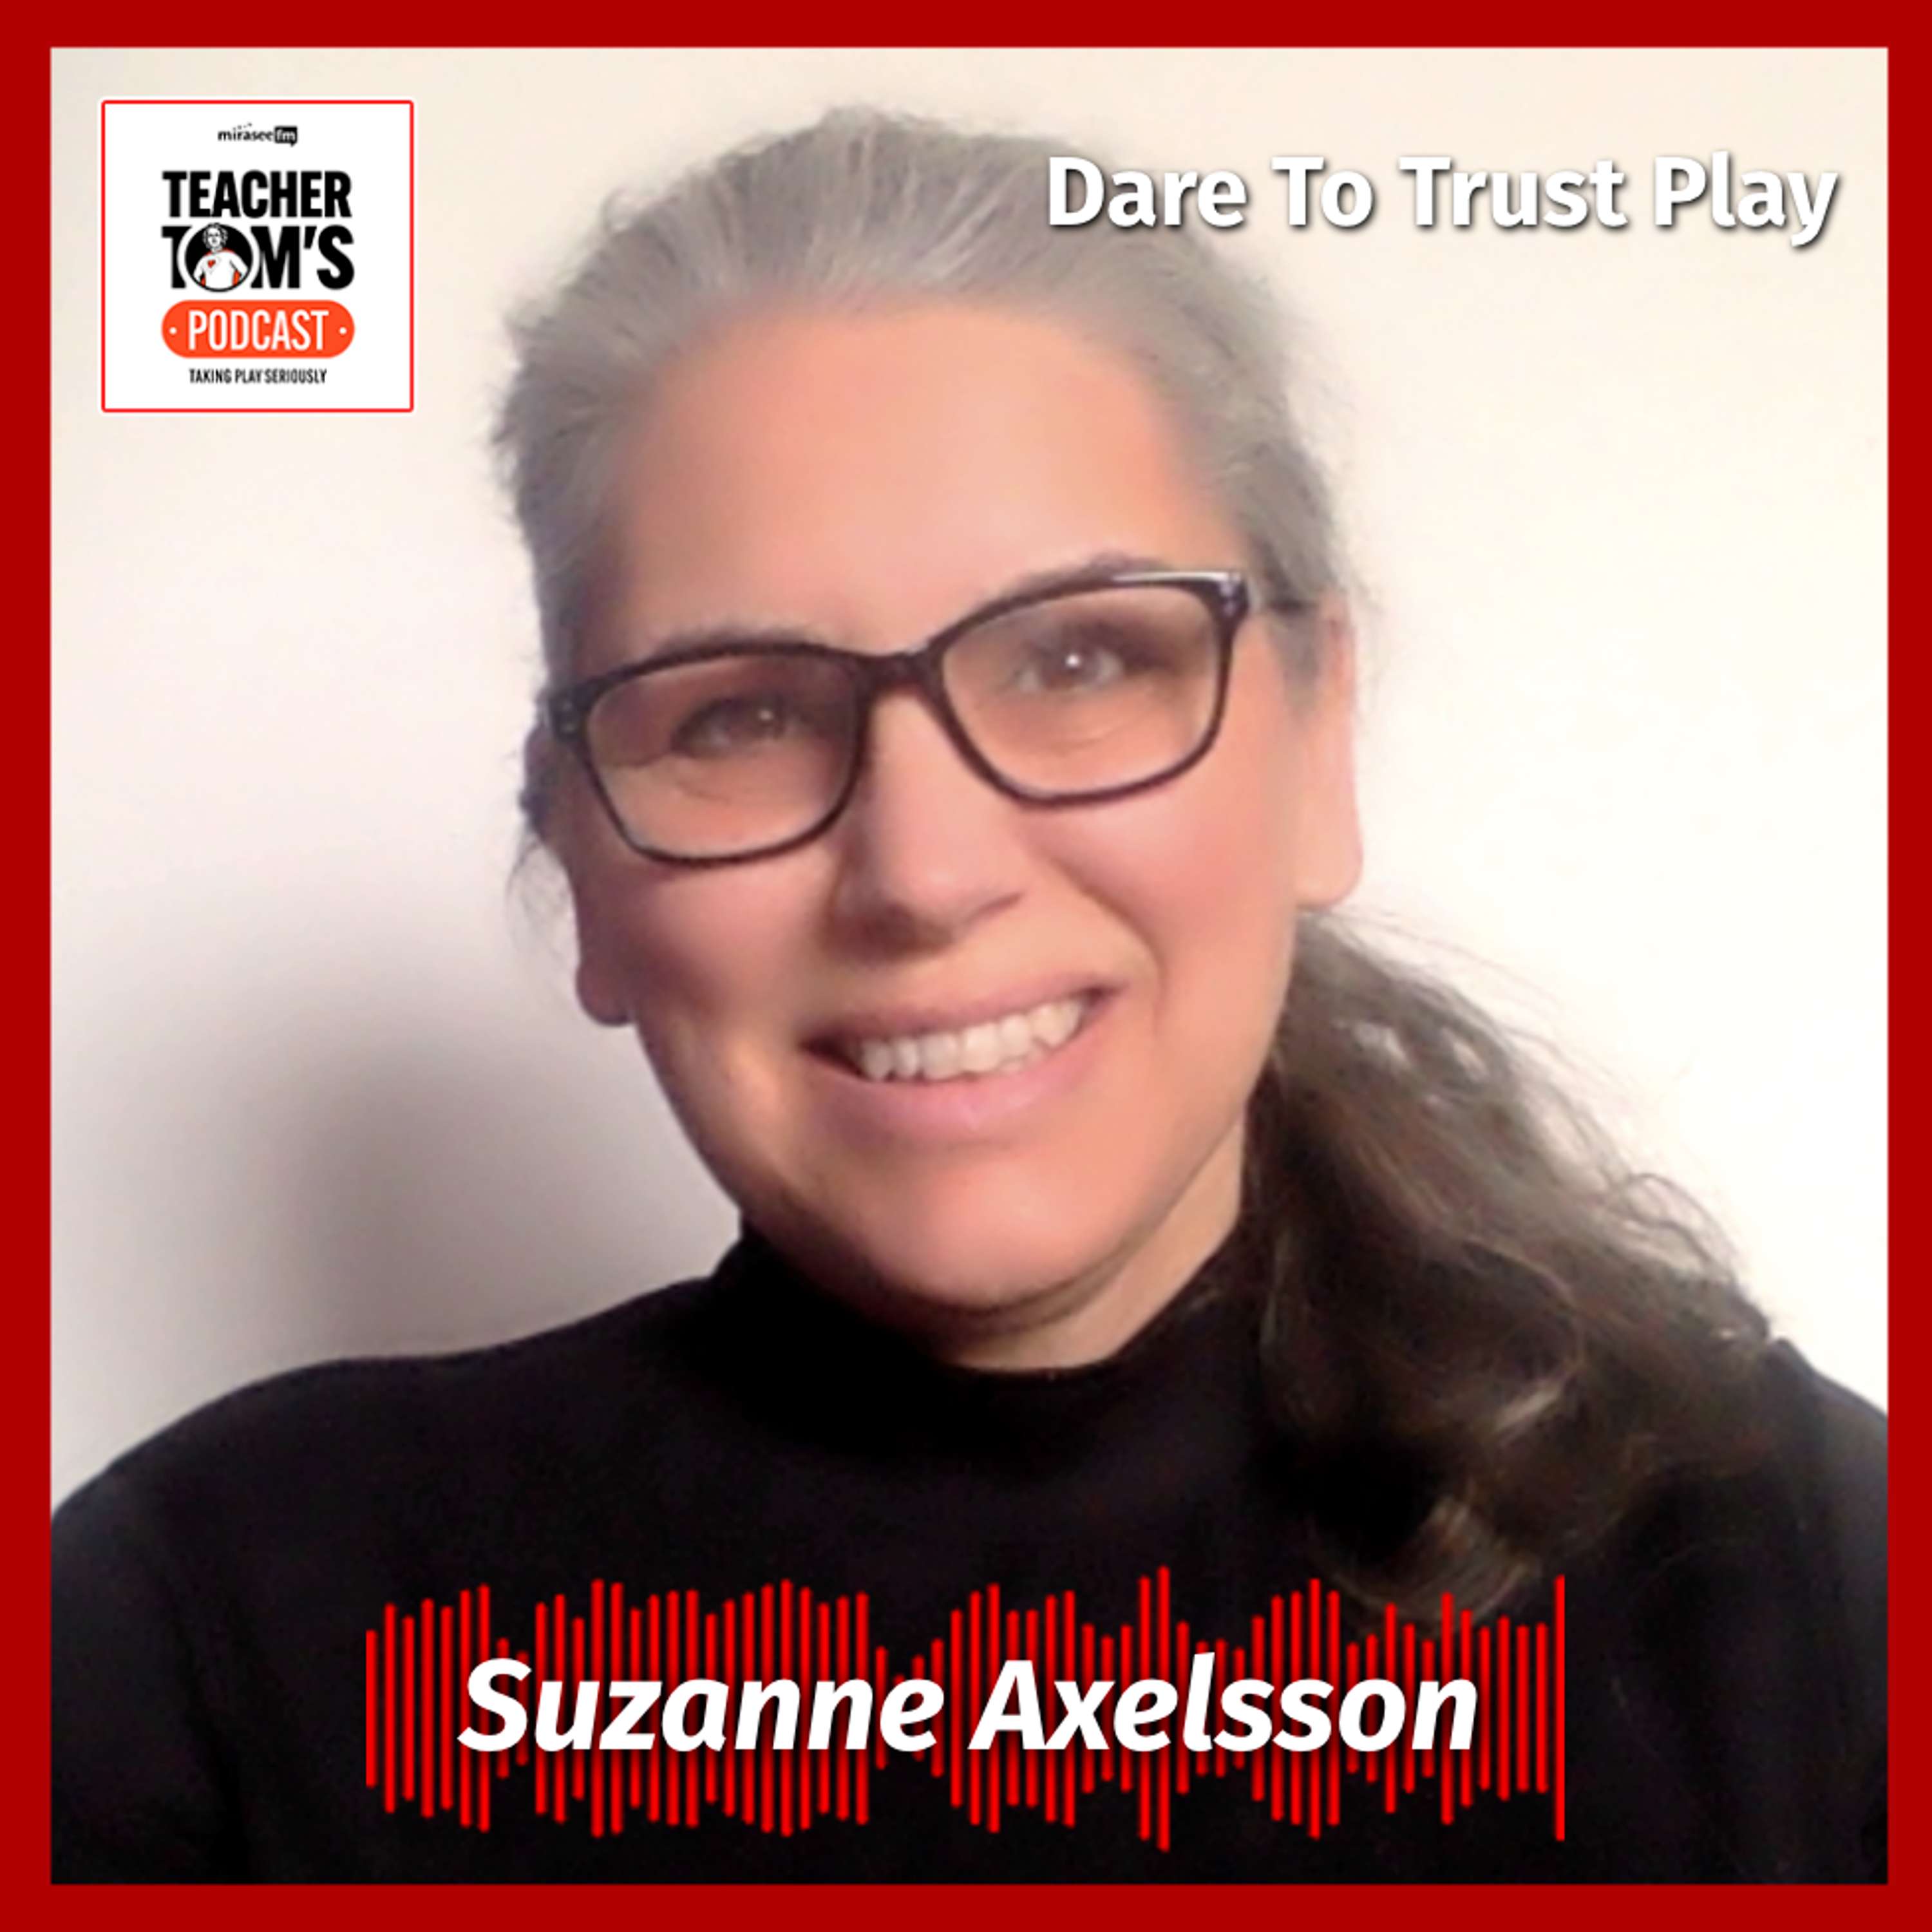 Dare to Trust Play (Suzanne Axelsson)